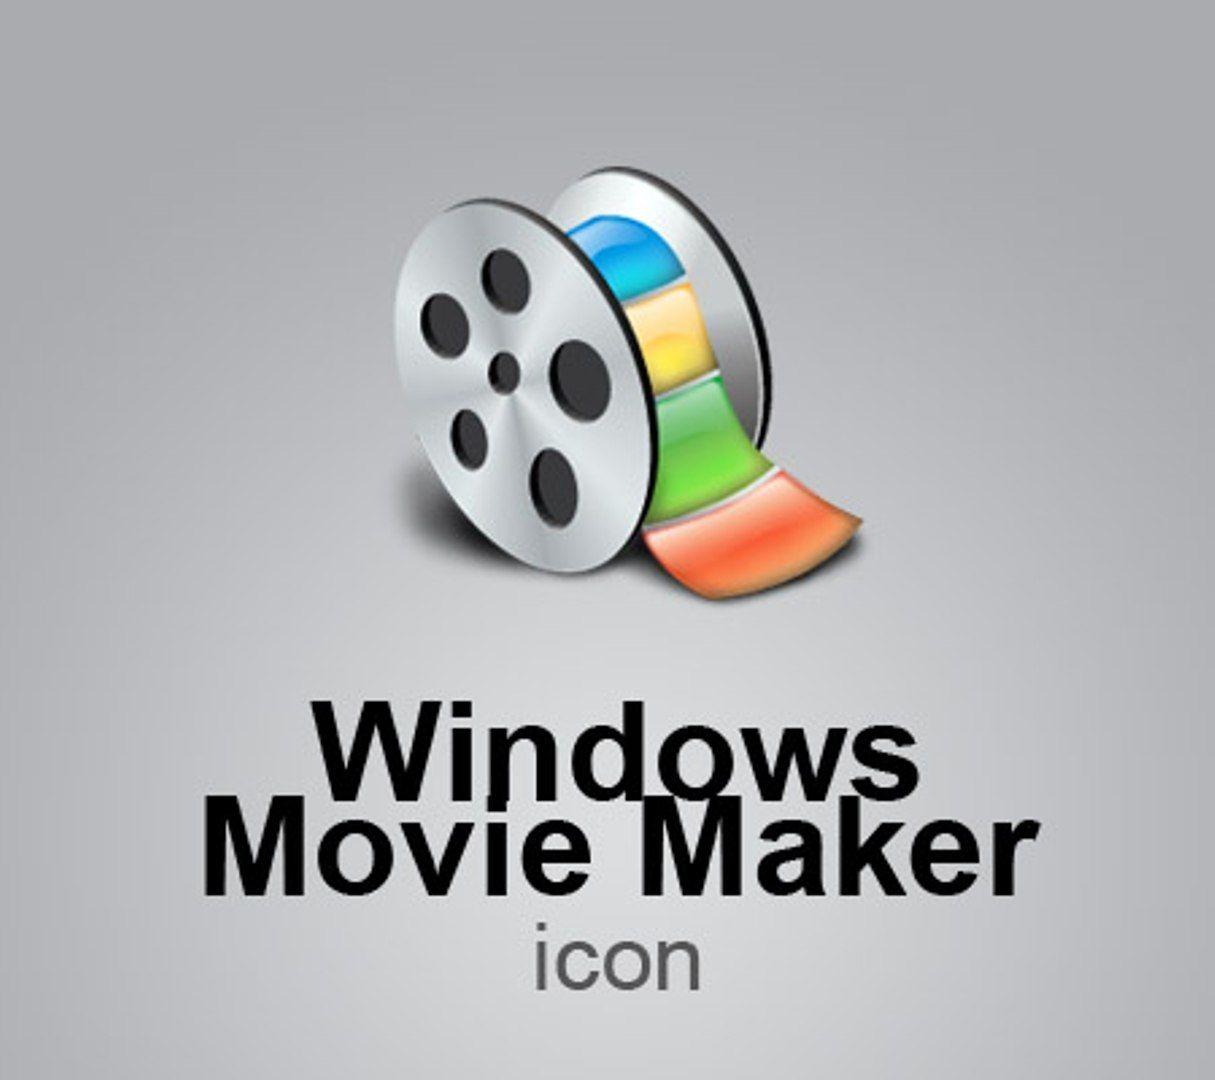 Windows Movie Maker Logo - How To Use Learn Windows Movie Maker in [Urdu/Hindi] - video dailymotion